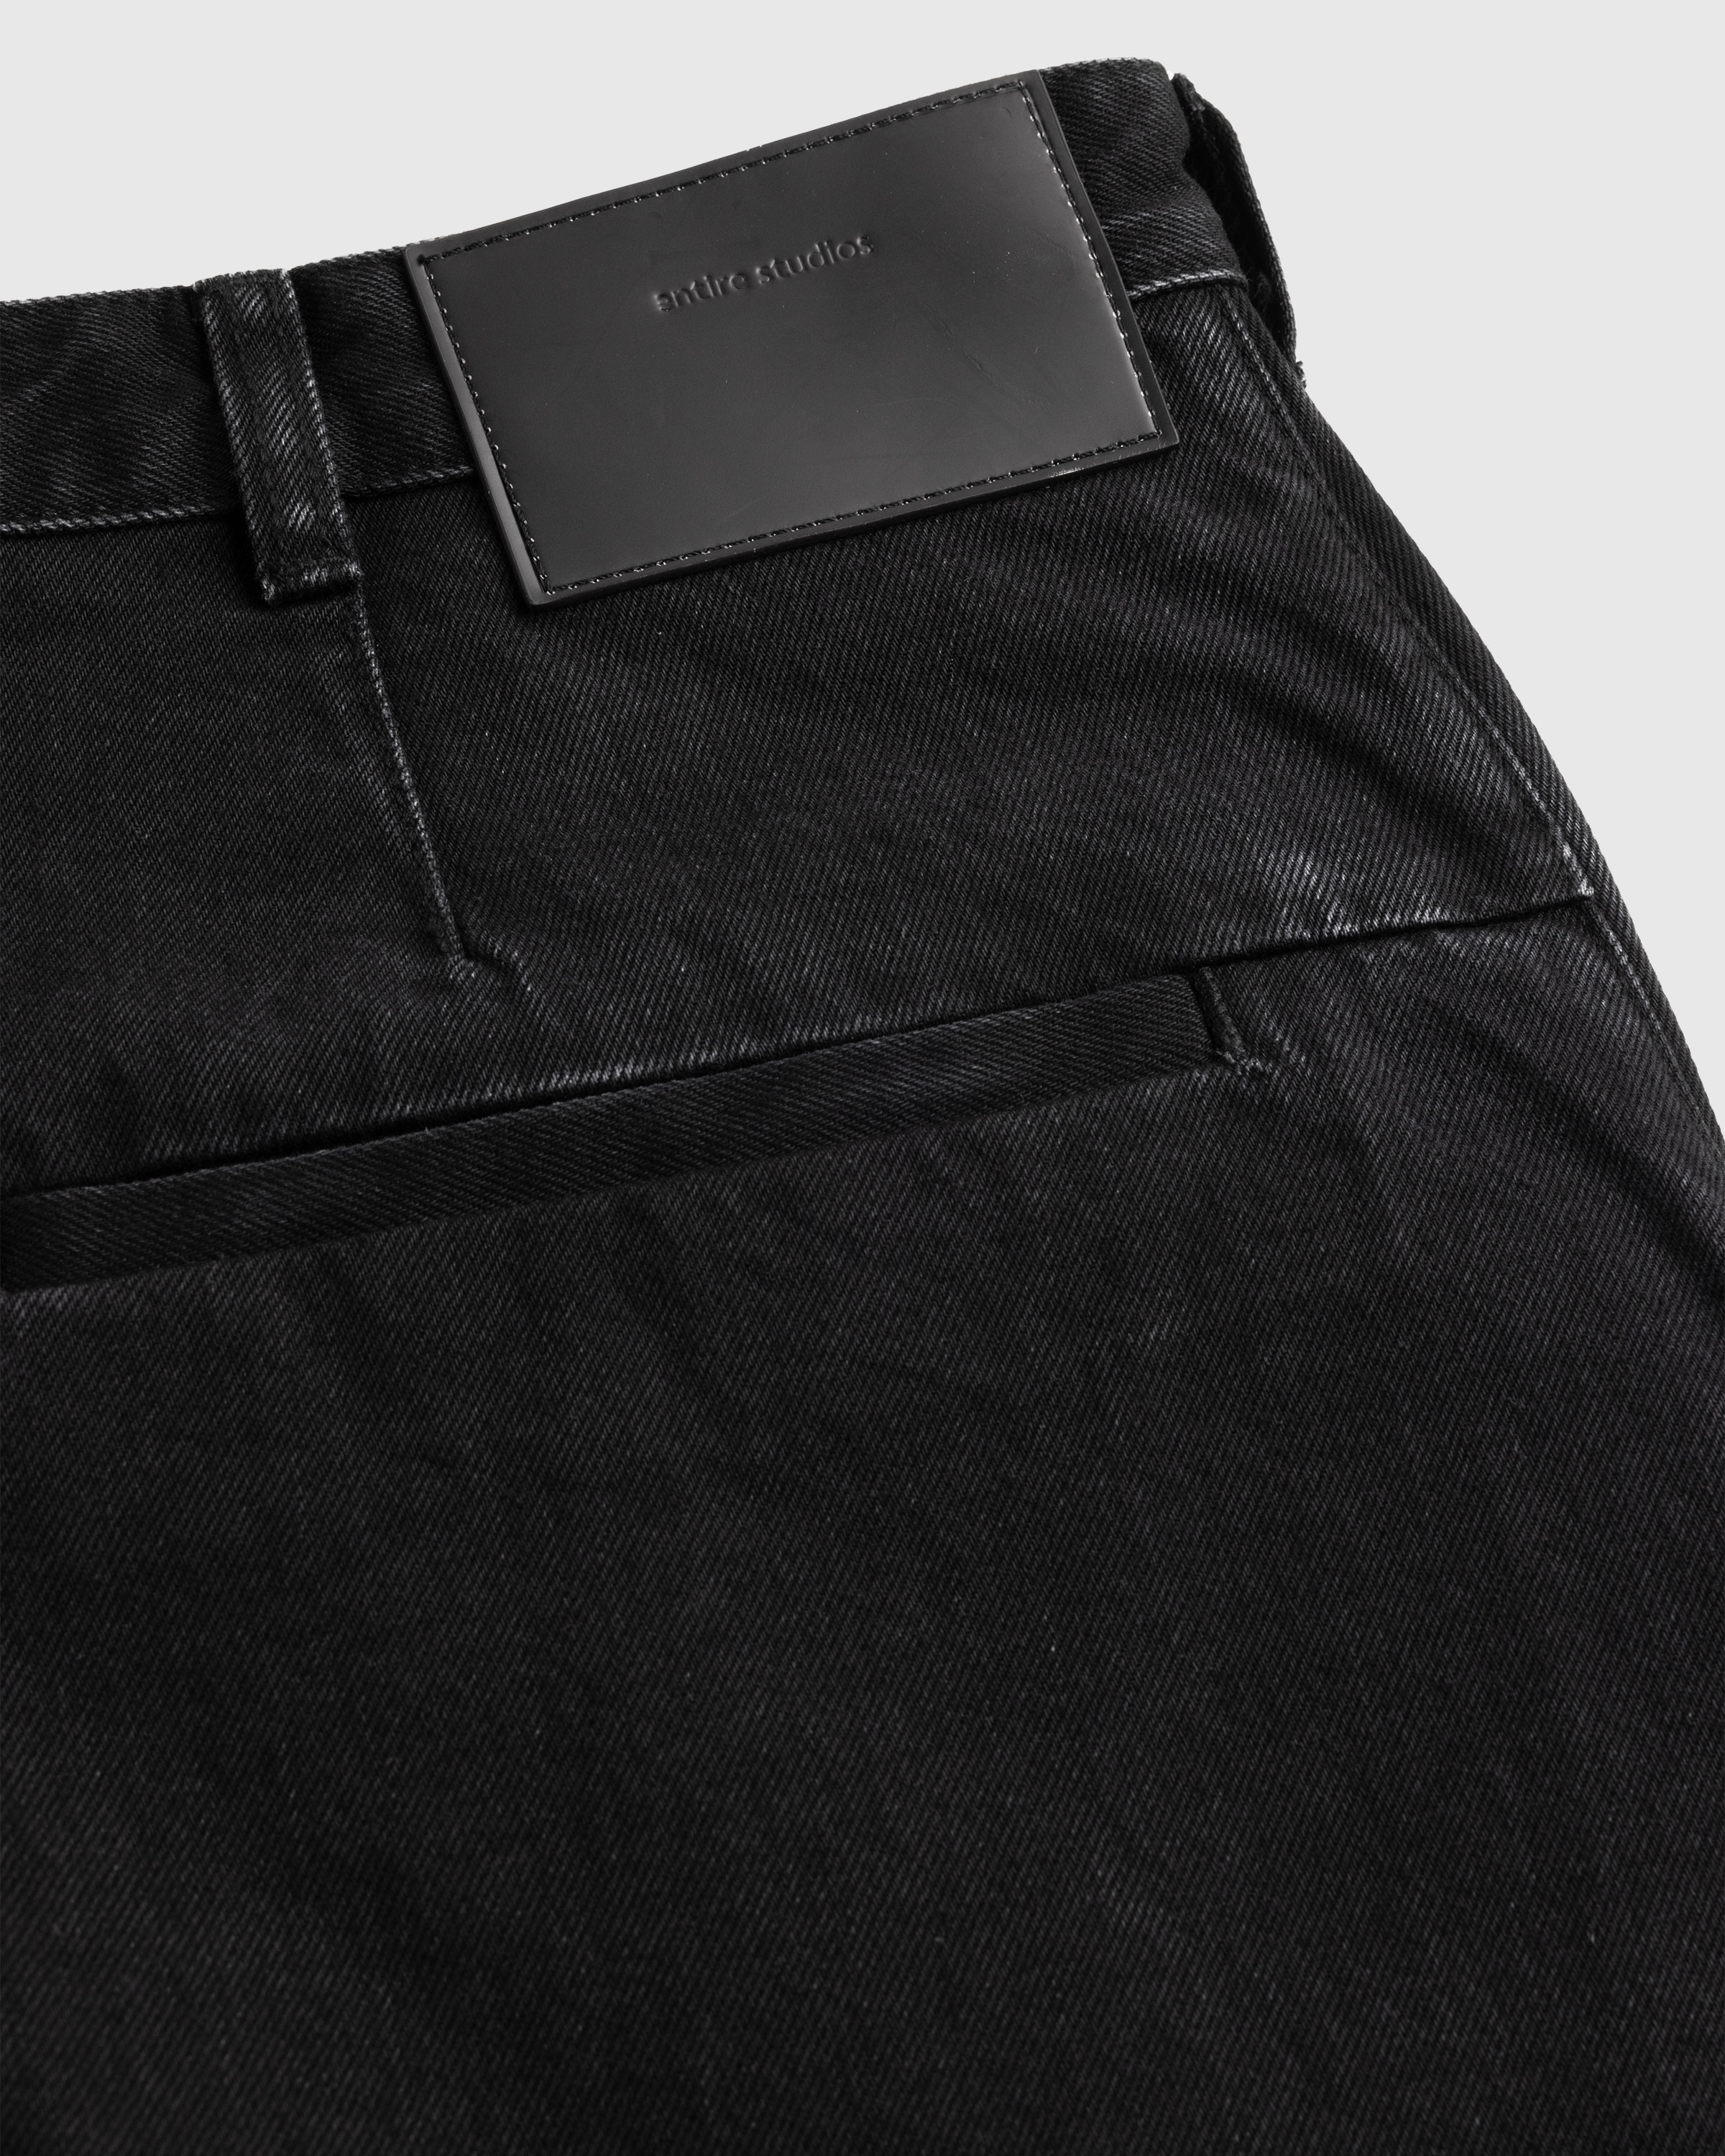 Entire Studios – Dem Jeans Magnetite - Denim - Black - Image 6